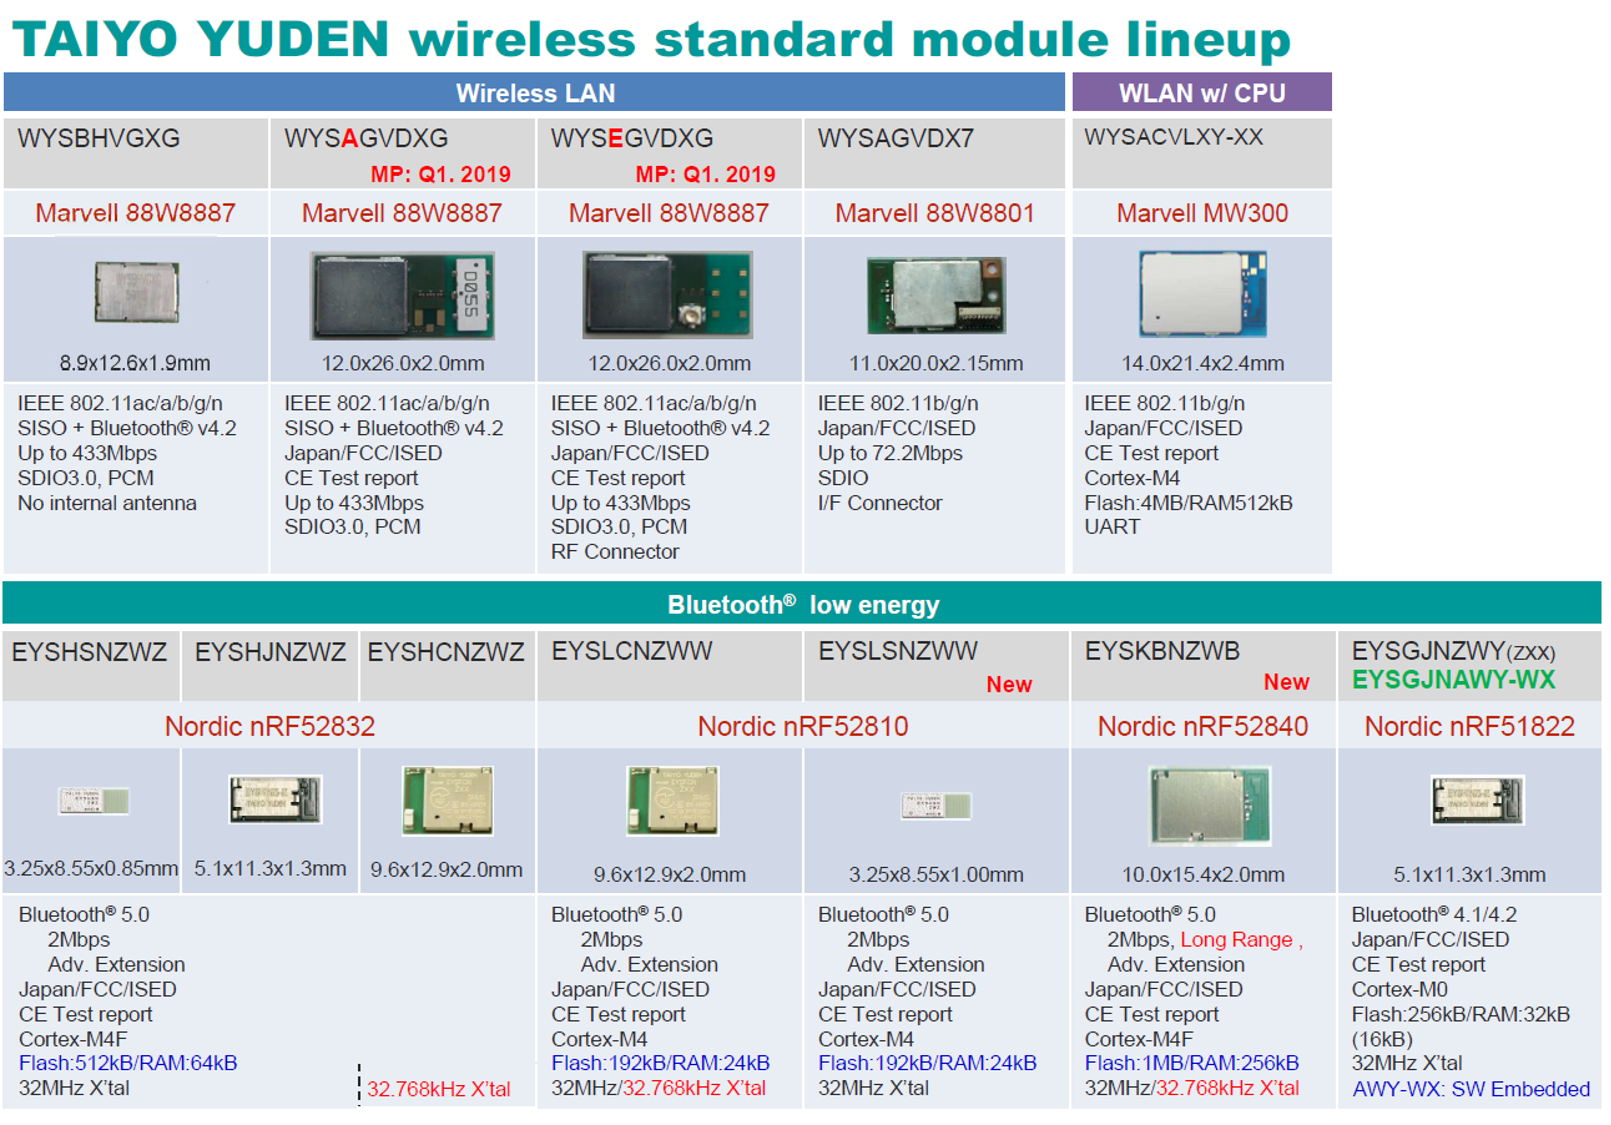 Nuevo Bluetooth® v5.0  2 Mbps and Long Range / Taiyo Yuden